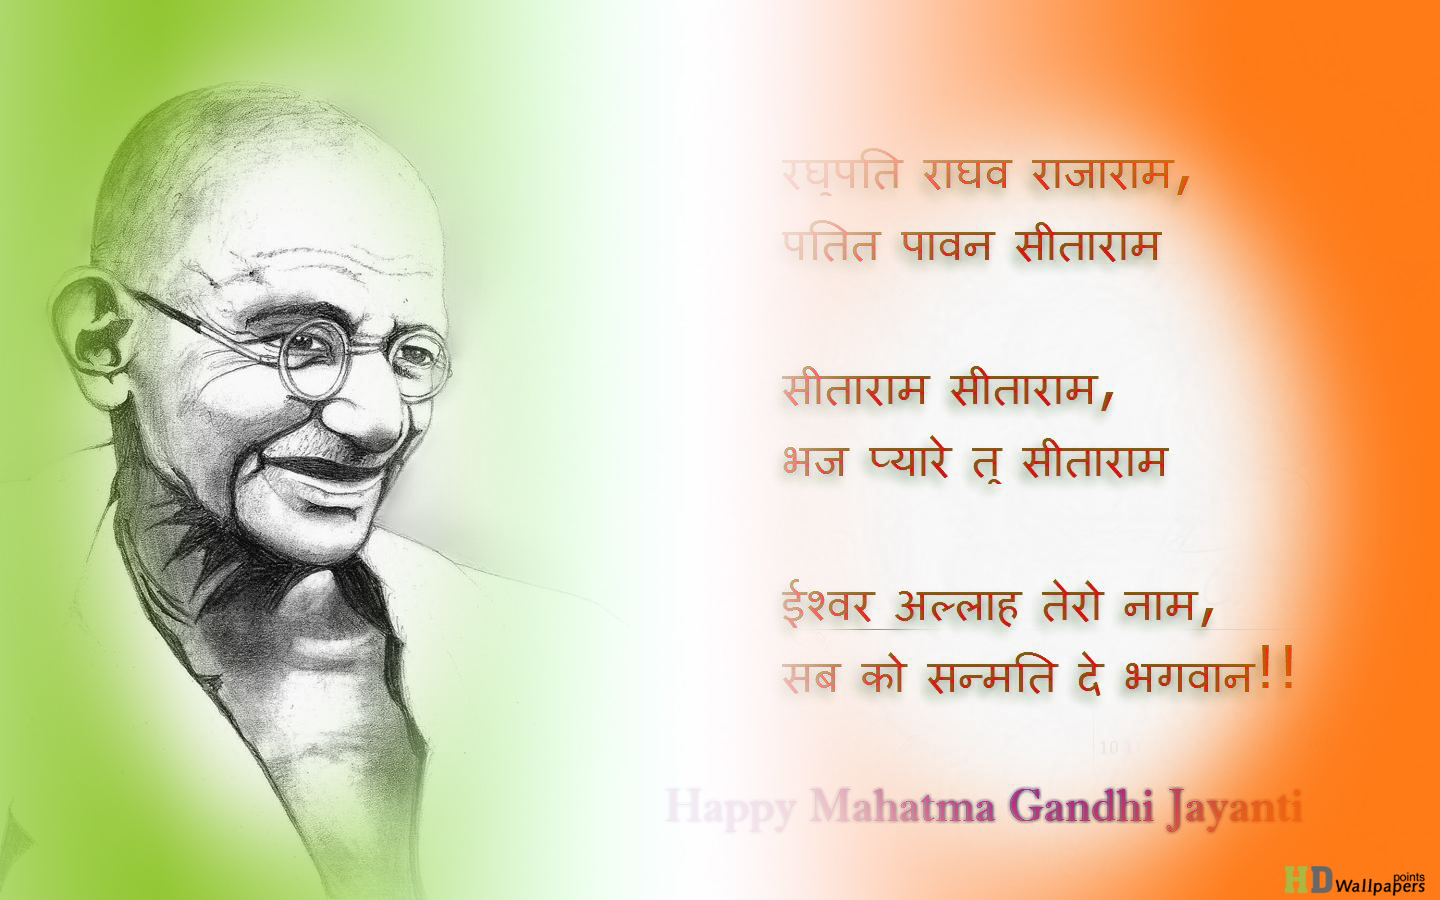 Famous Quotes By Mahatma Gandhi Images For Facebook - Mahatma Gandhi Jayanti 2017 - HD Wallpaper 